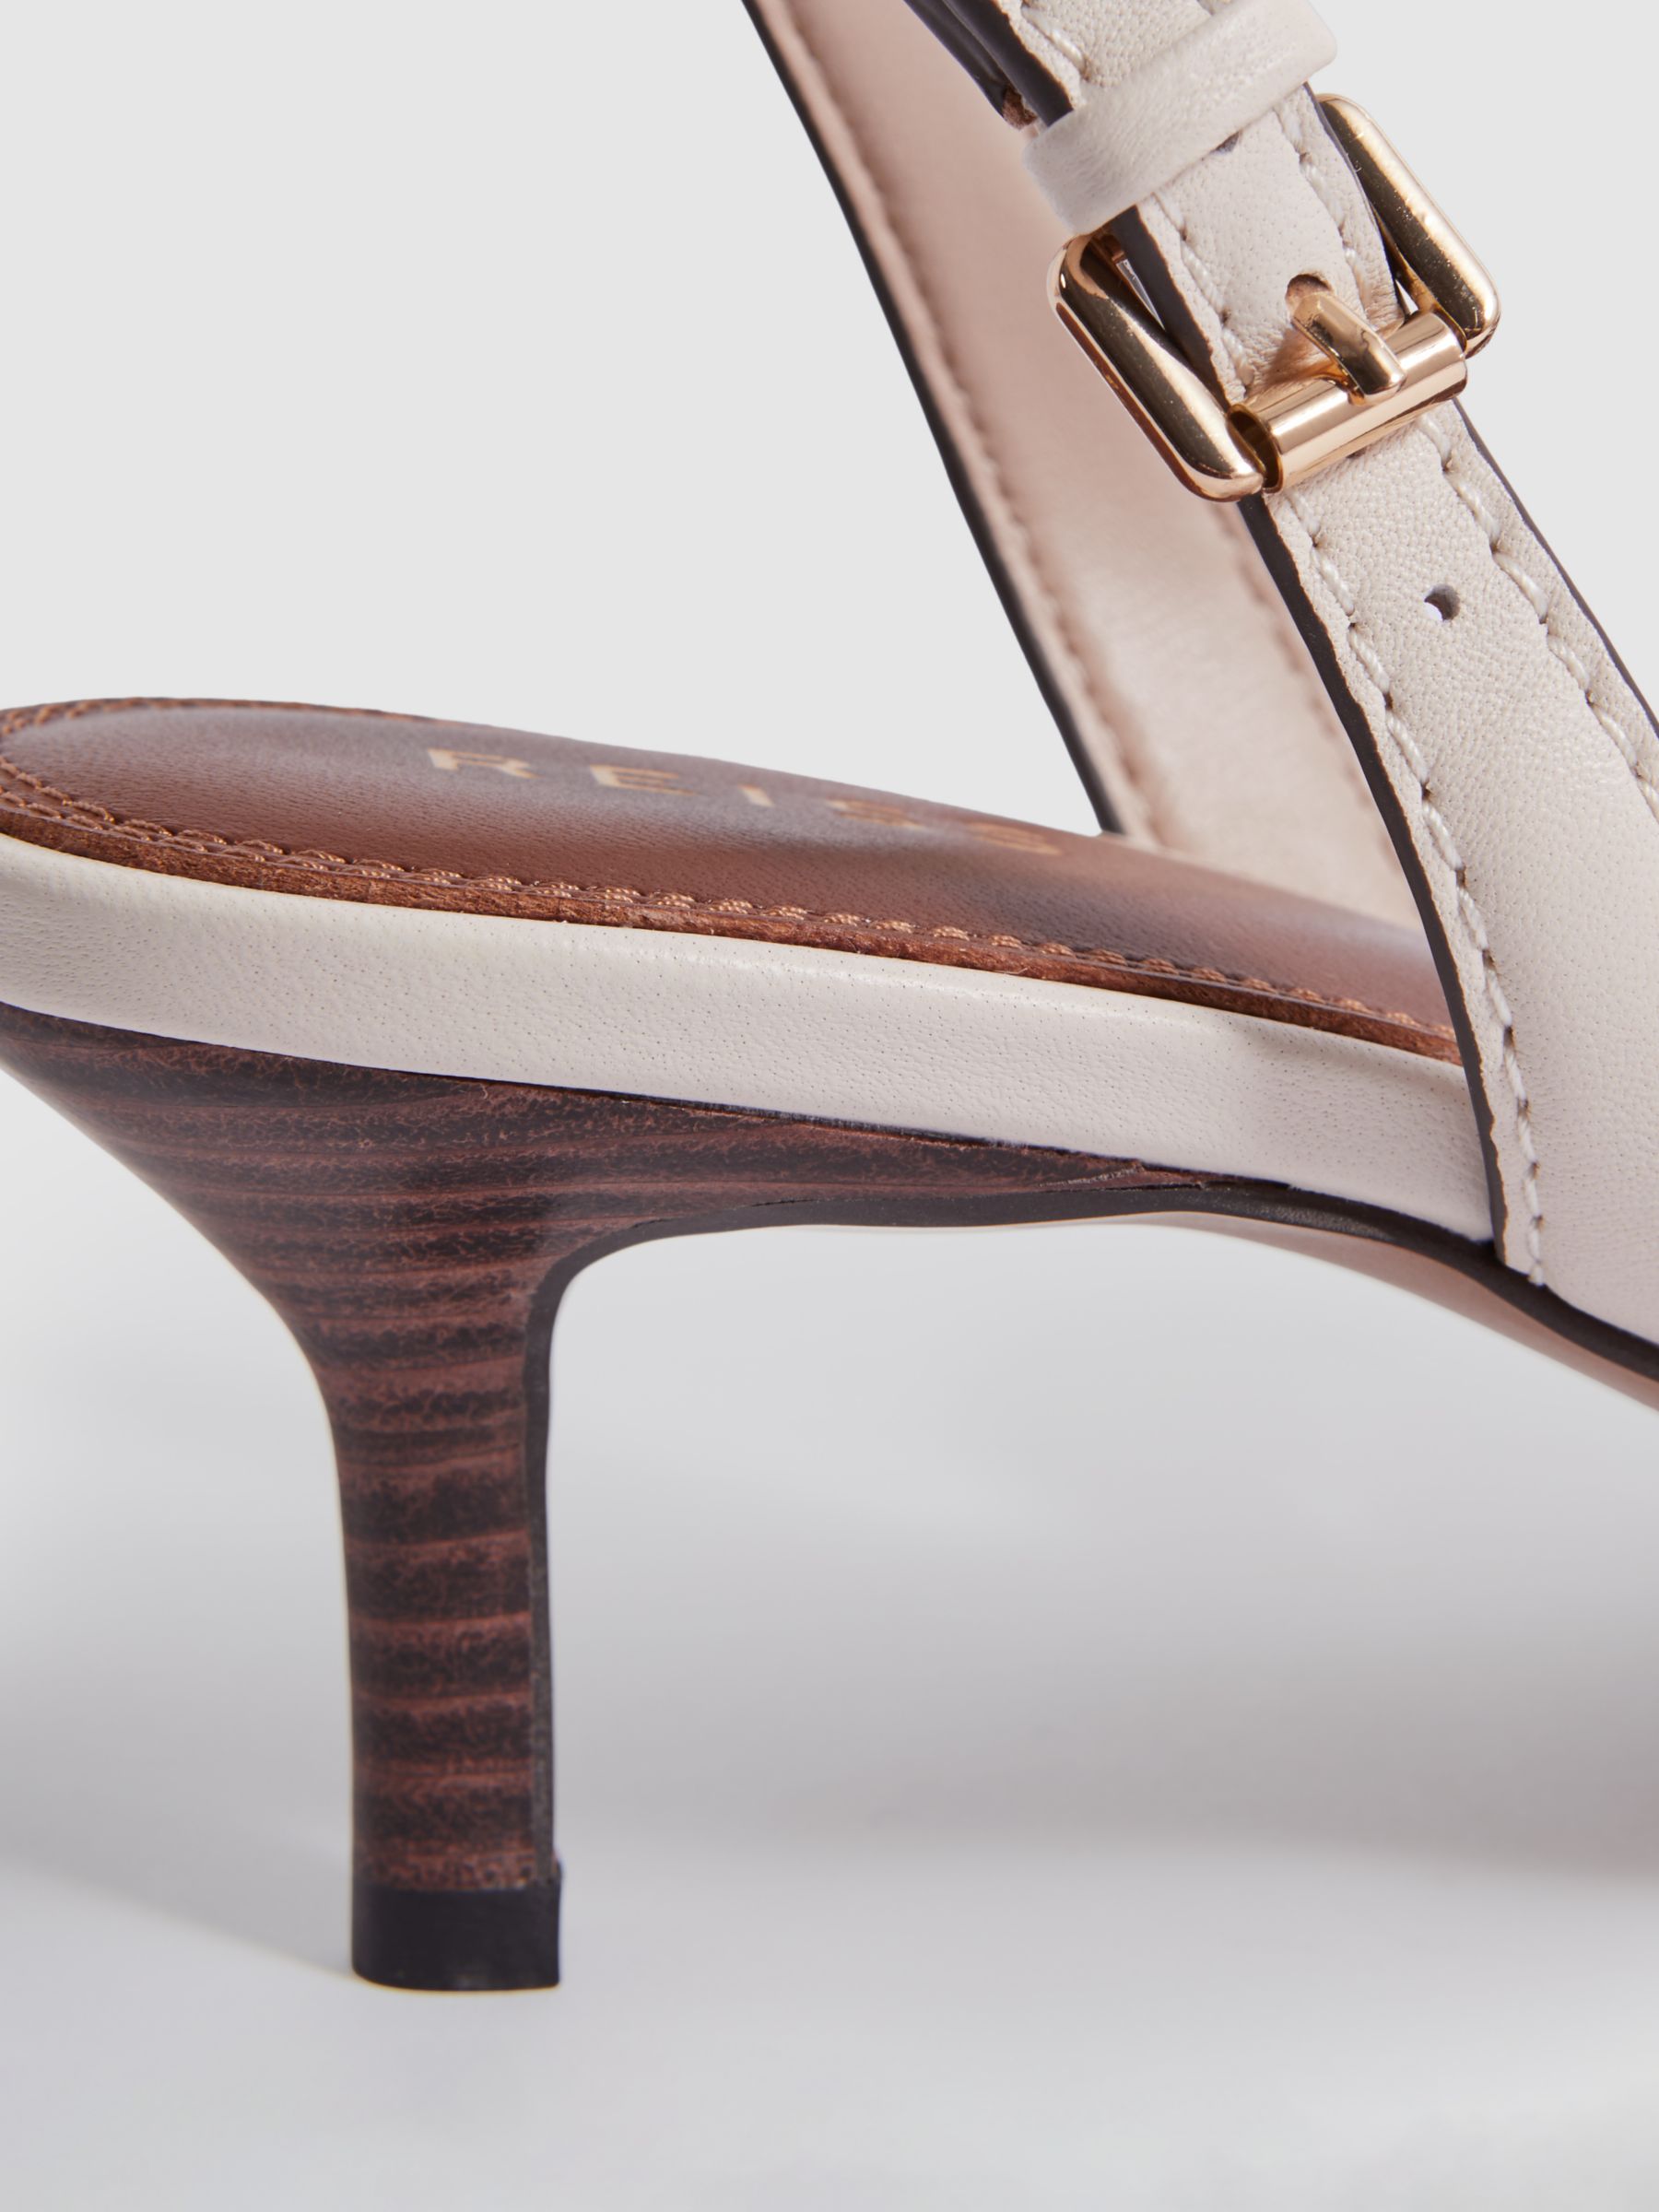 Buy Reiss Nina Leather Kitten Heel Sandals, White Online at johnlewis.com